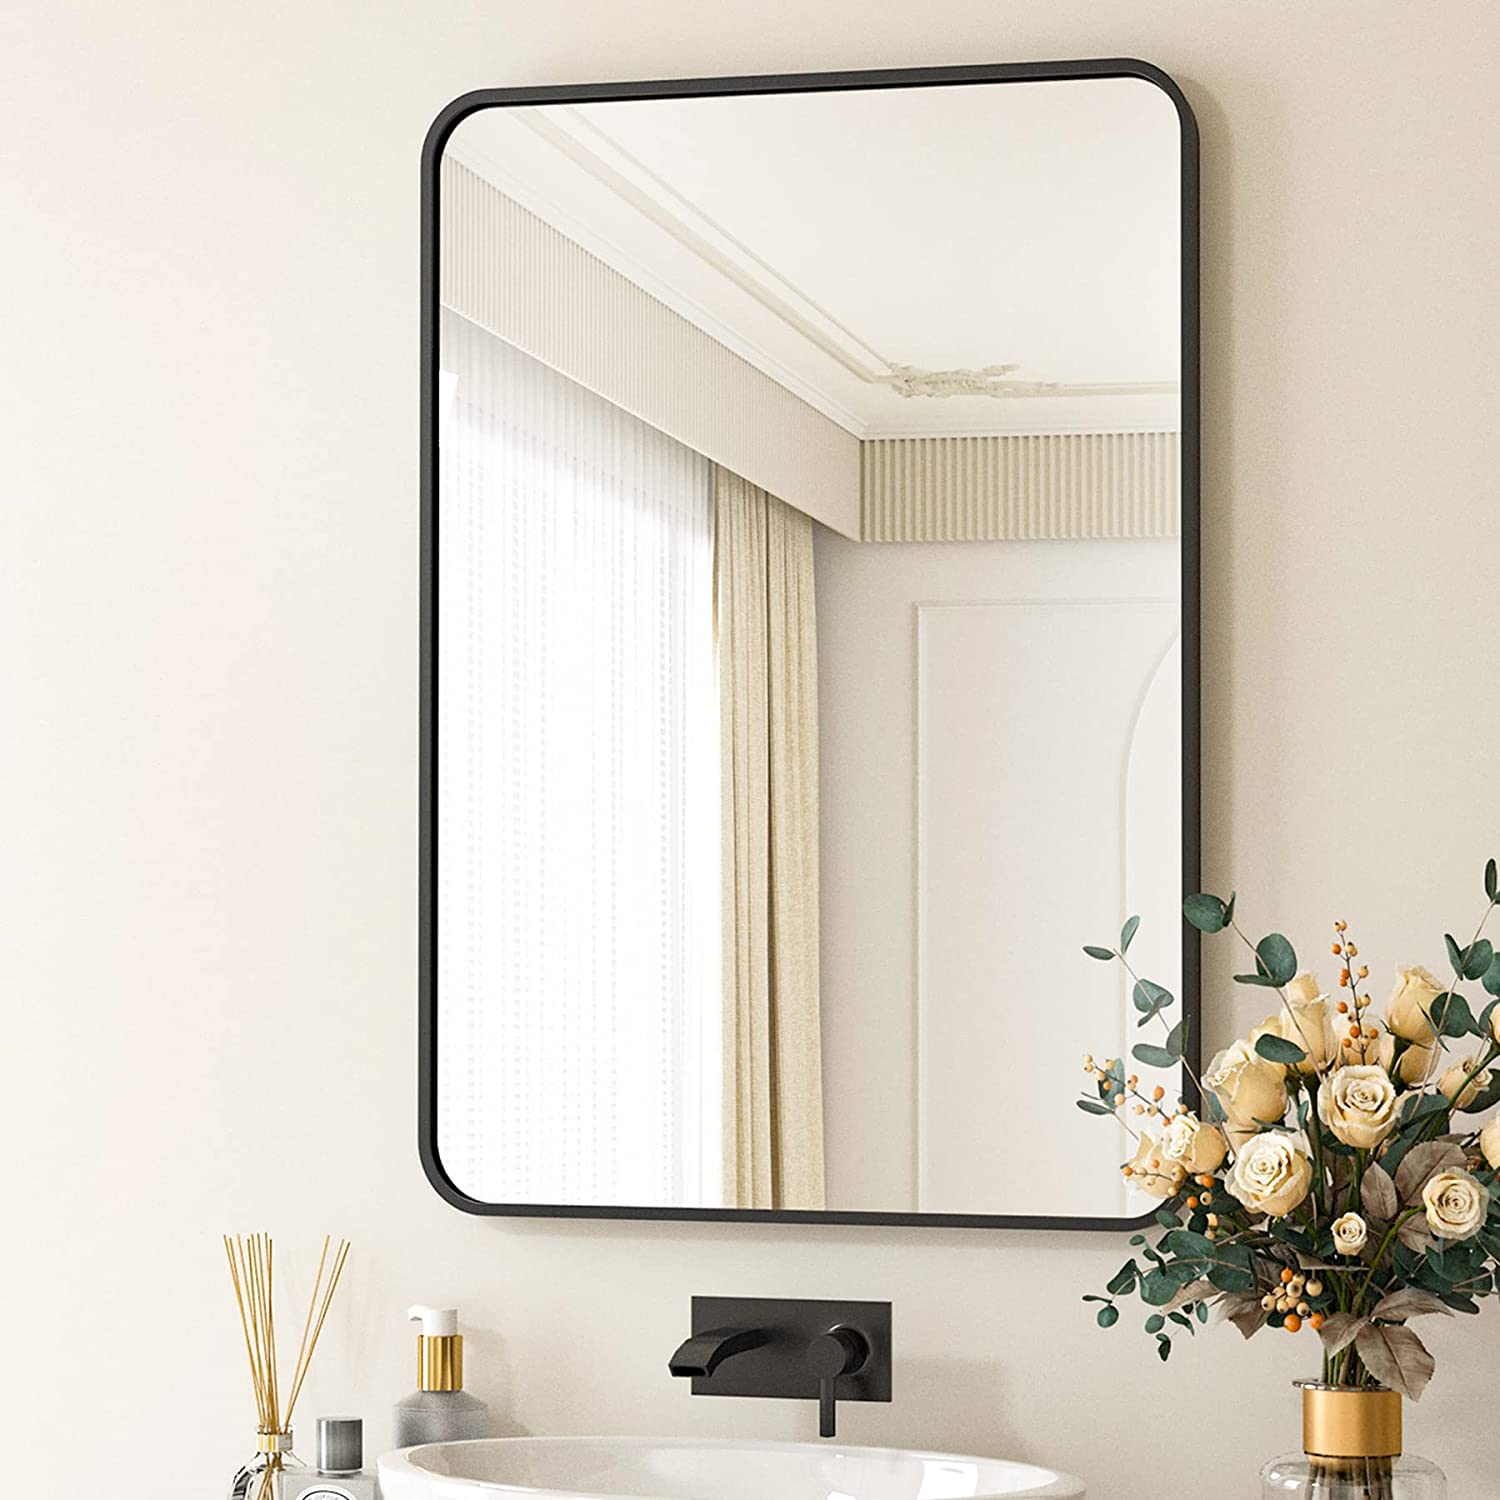 BEAUTYPEAK 24"x36" Wall Mirror Rounded Corners Hanging Vanity Mirror Black - image 1 of 9